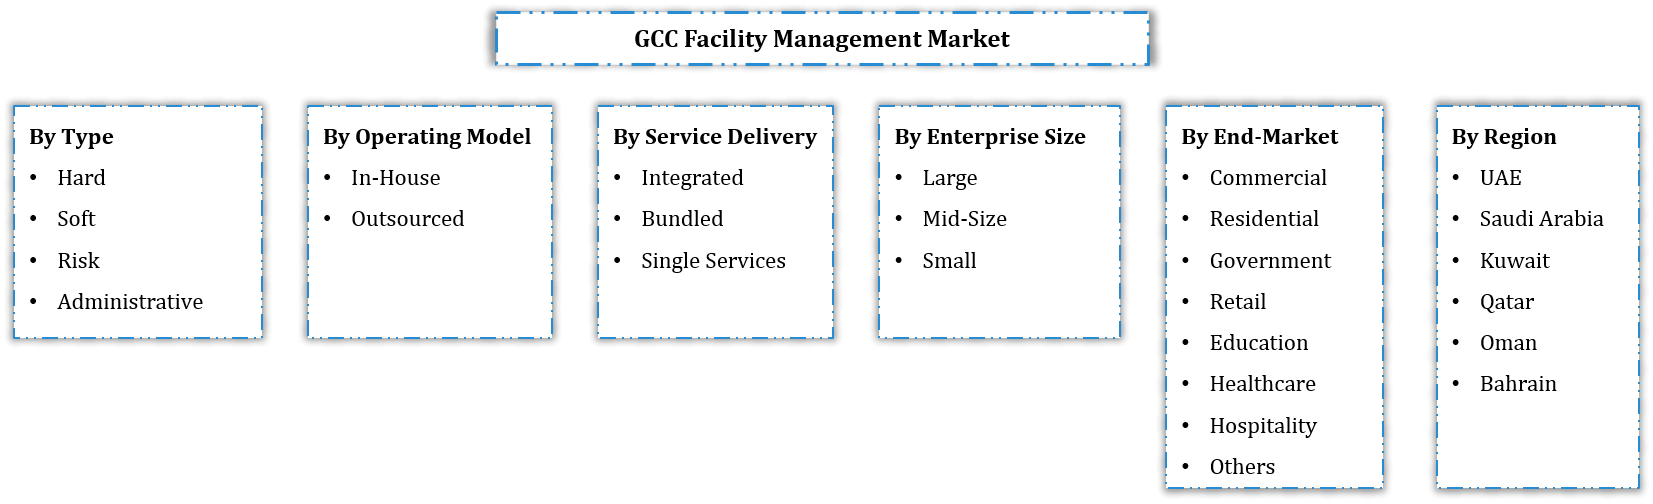 GCC Facility Management Market Segmentation